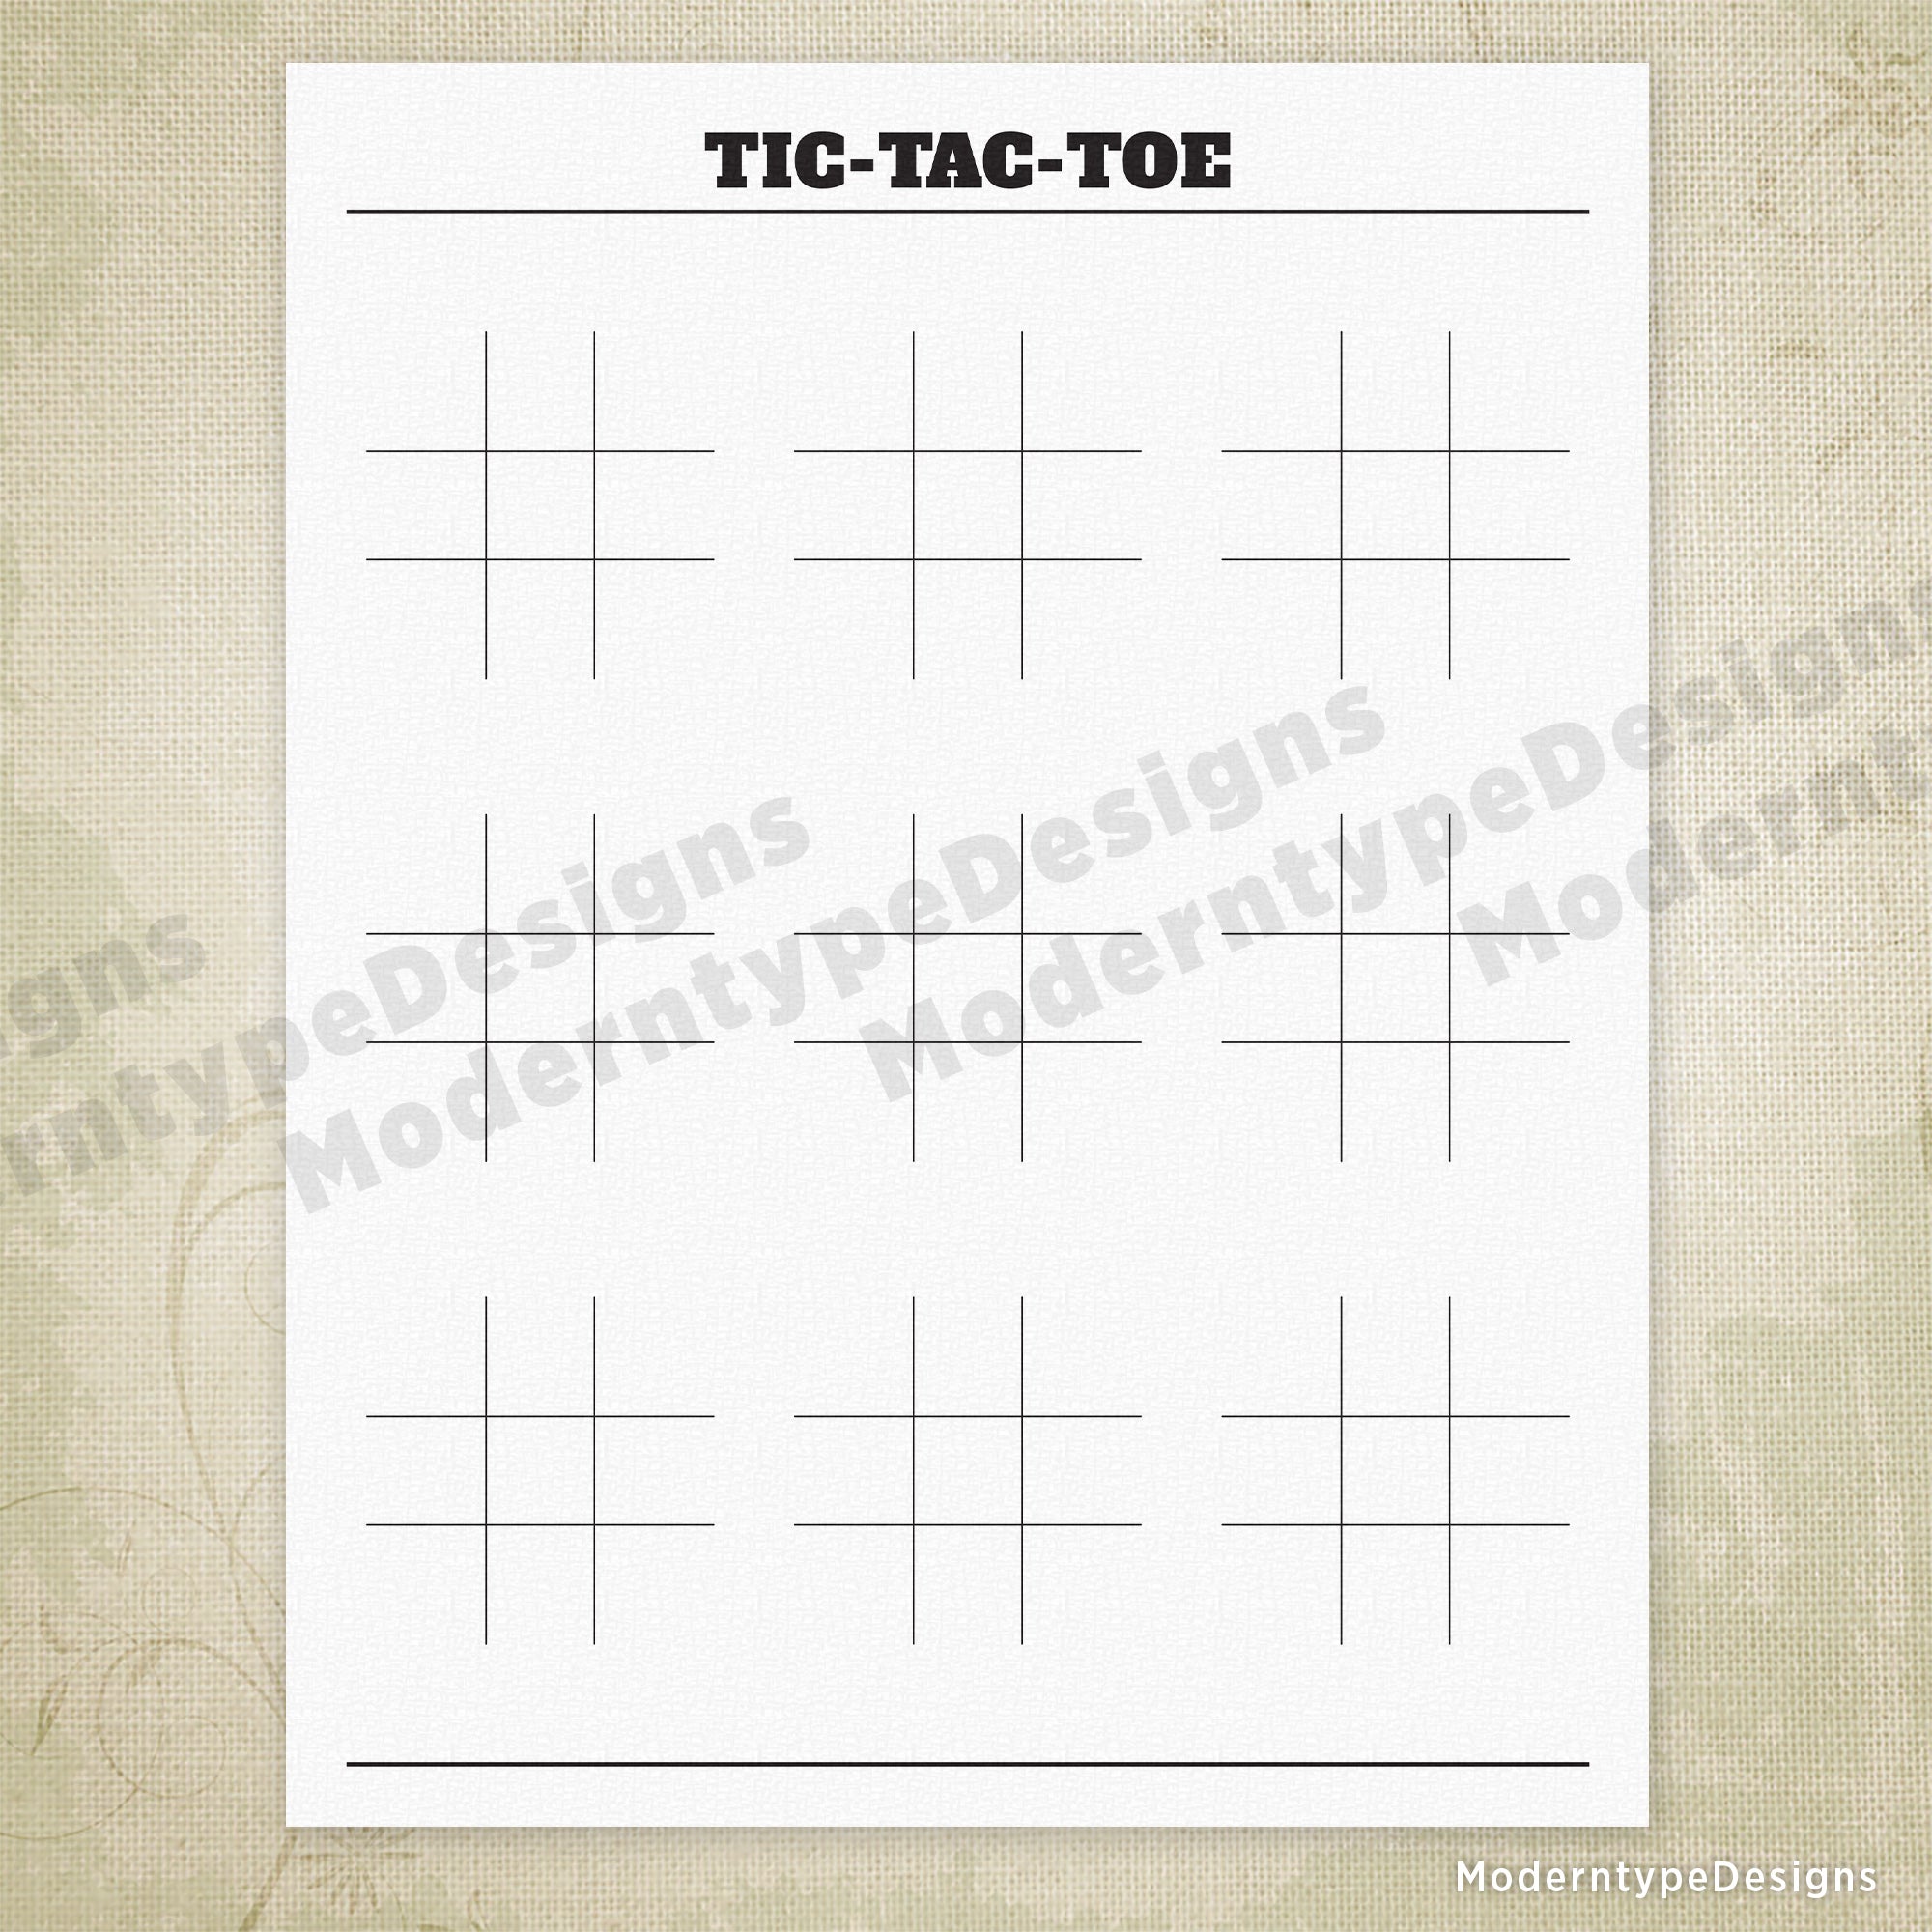 Free Hugs: 110 Game Sheets - 660 Tic-Tac-Toe Blank Games